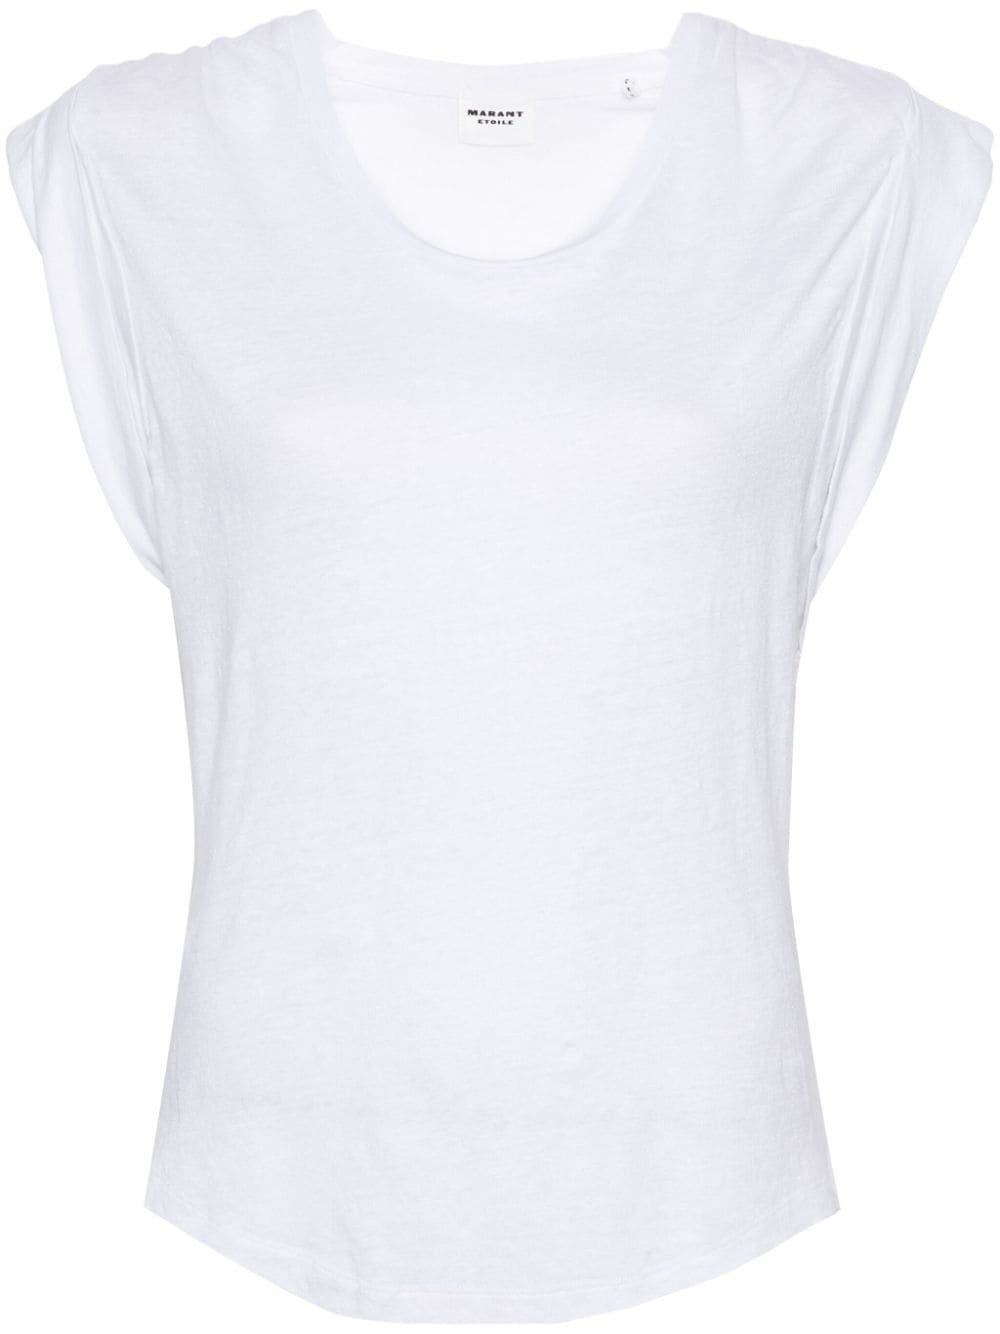 MARANT ÉTOILE Kotty linen T-shirt - White von MARANT ÉTOILE